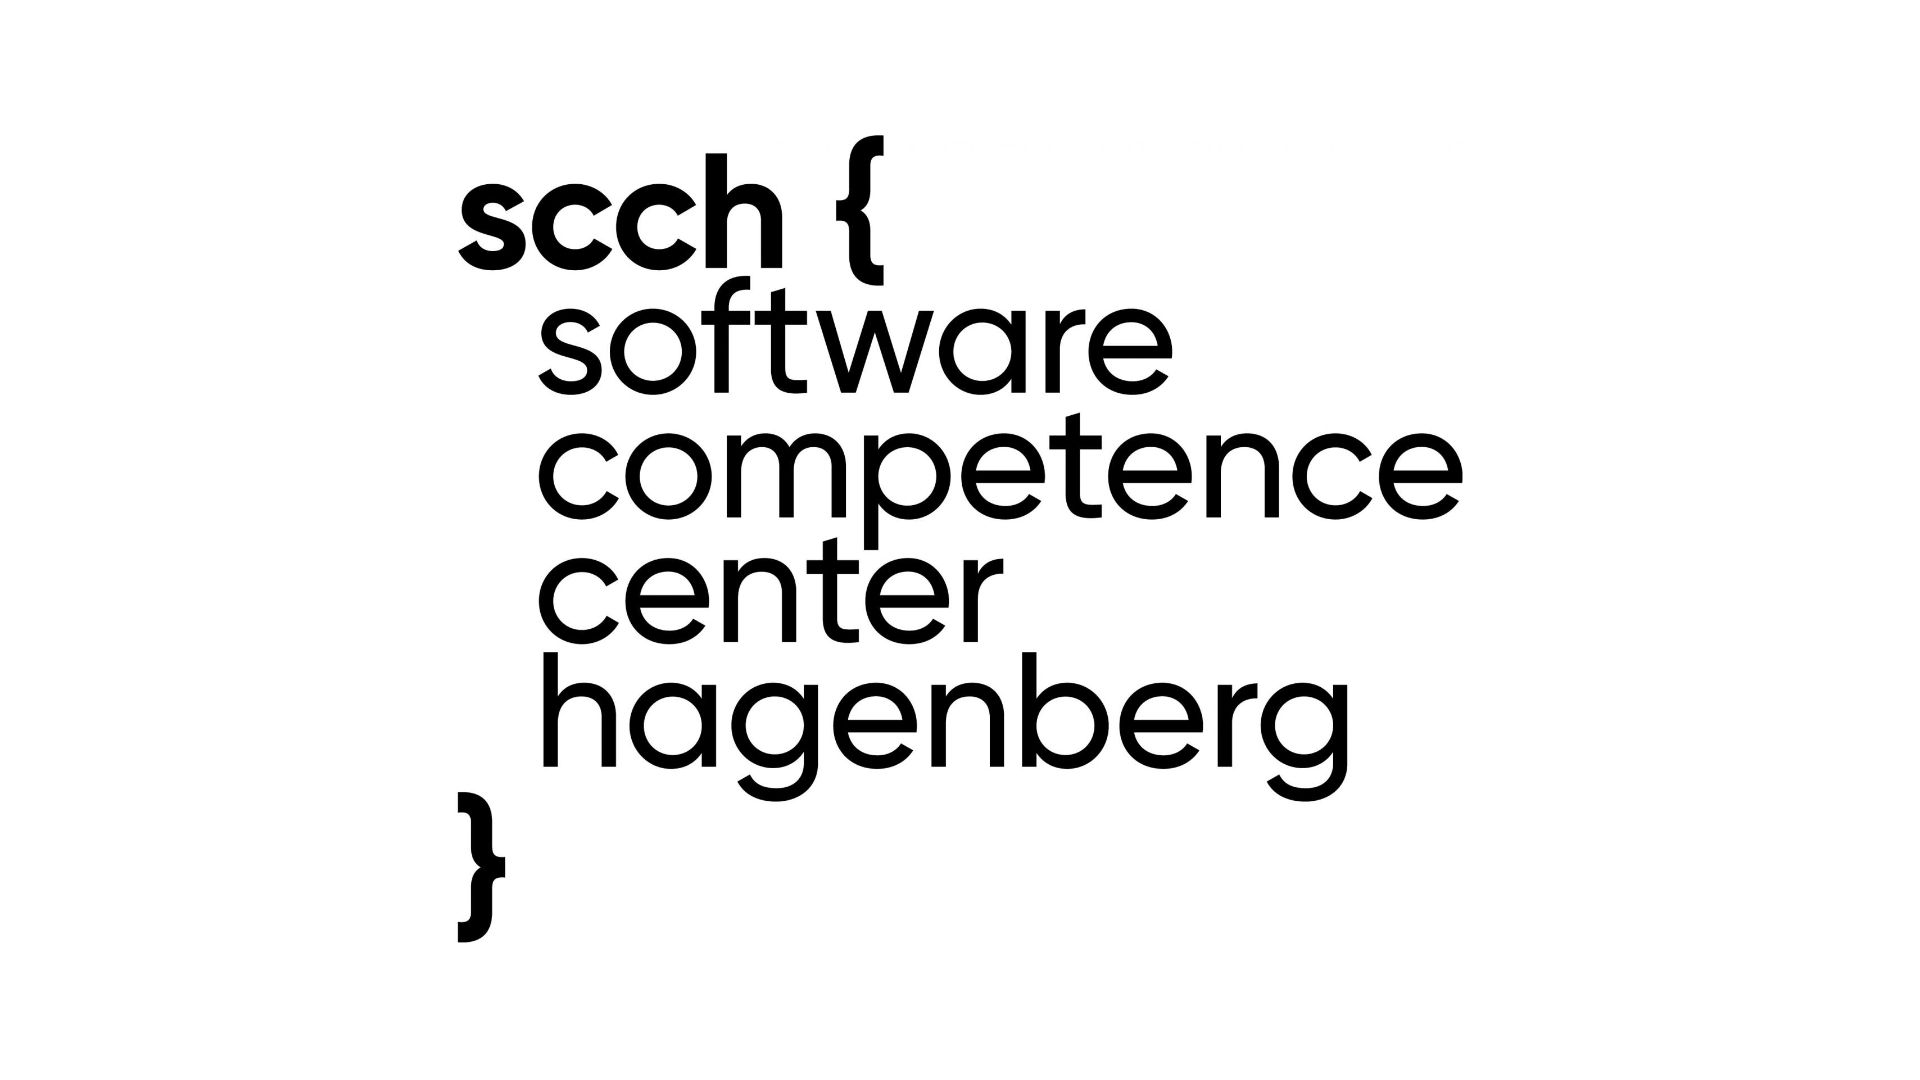 SCCH - Software Competence Center Hagenberg